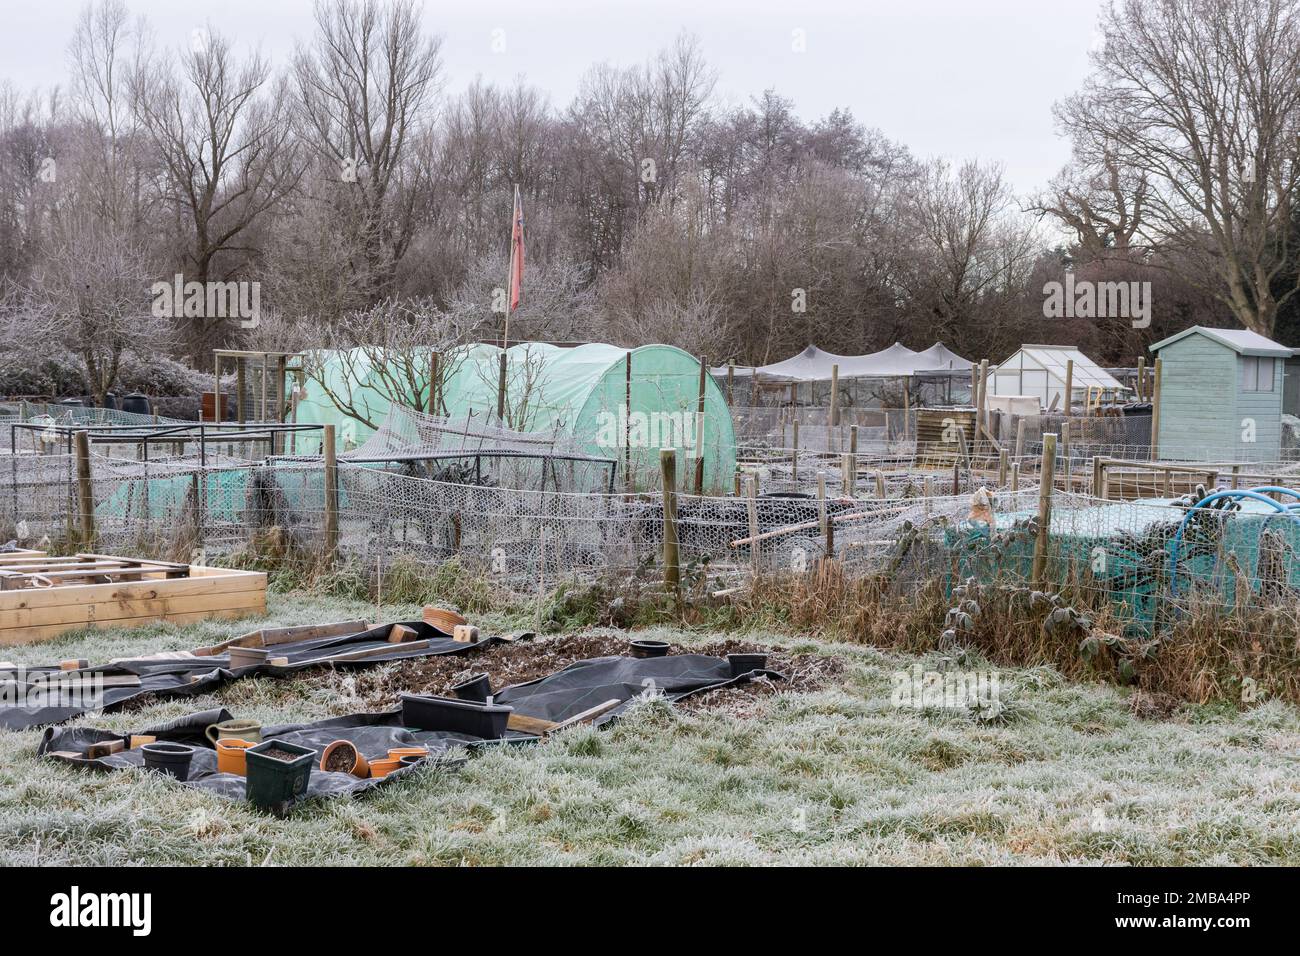 Allotissements glatés, jardins d'allotissement en hiver, Angleterre, Royaume-Uni Banque D'Images